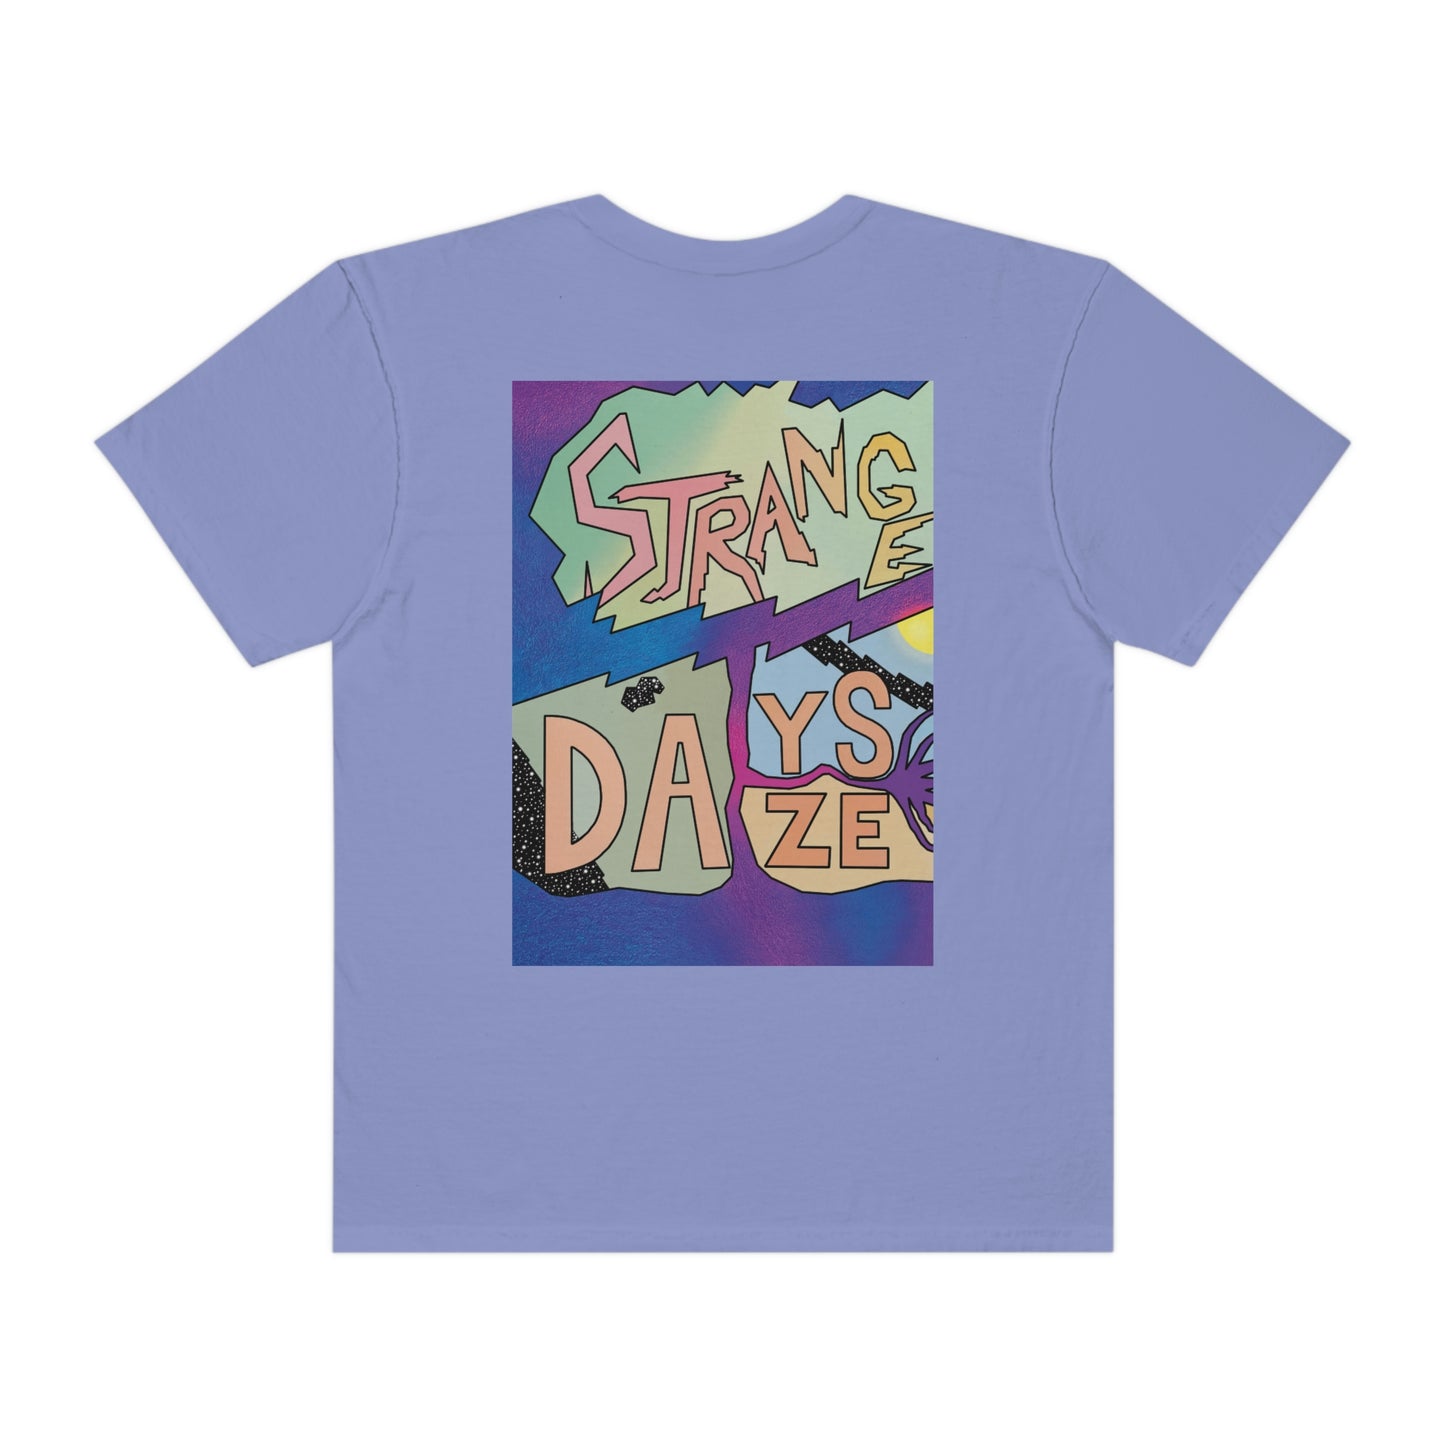 Unisex Strange Da-ys-ze T-Shirt